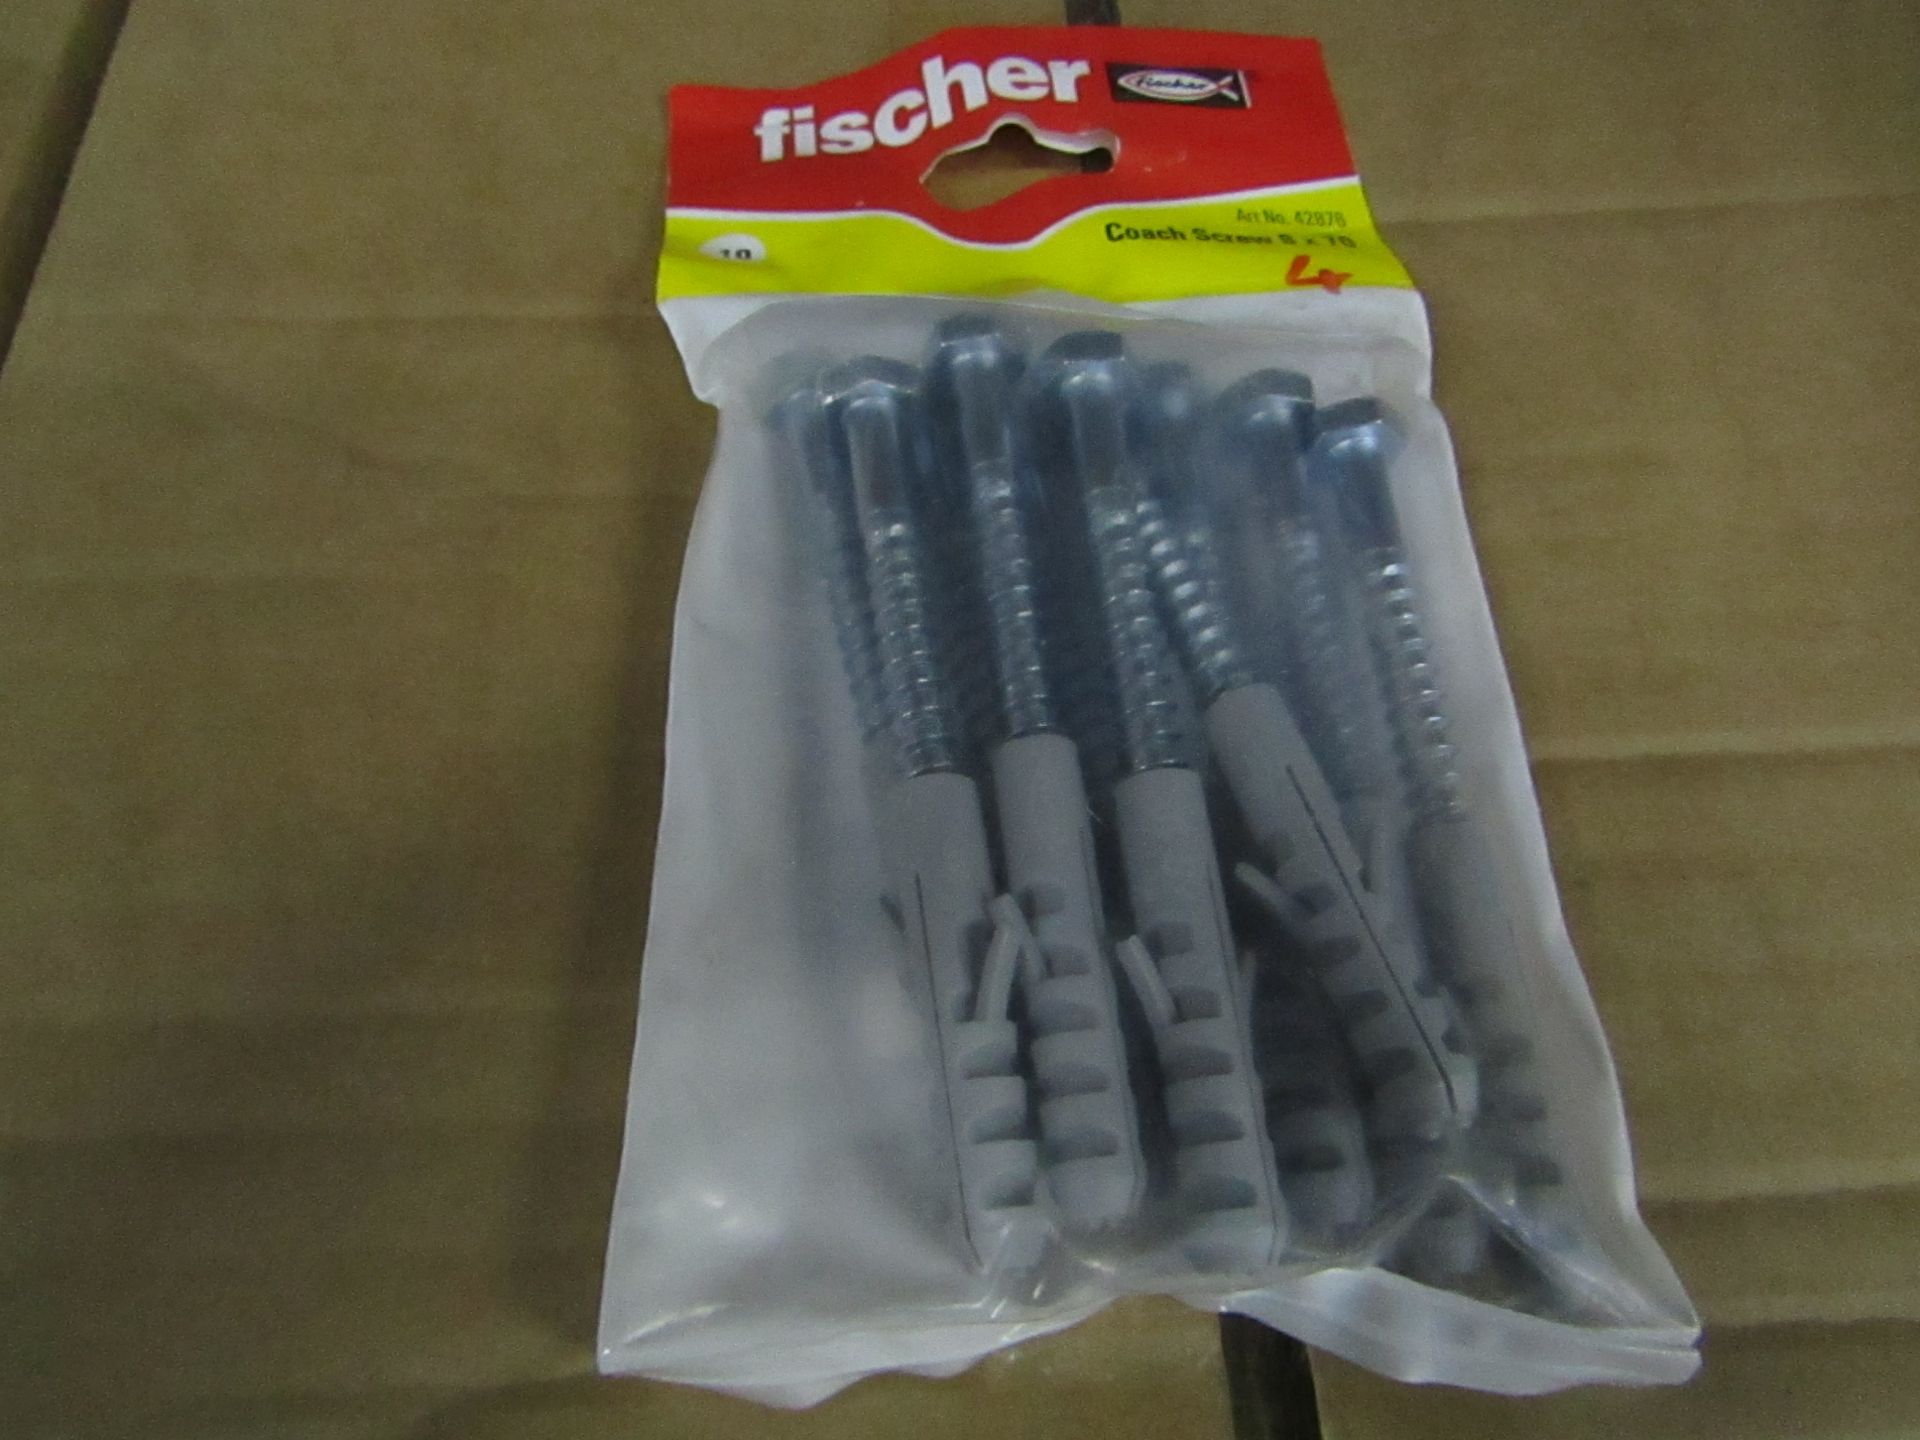 20x Fischer - Coach Screw 8 x 70 (Packs of 10) - New & Packaged.